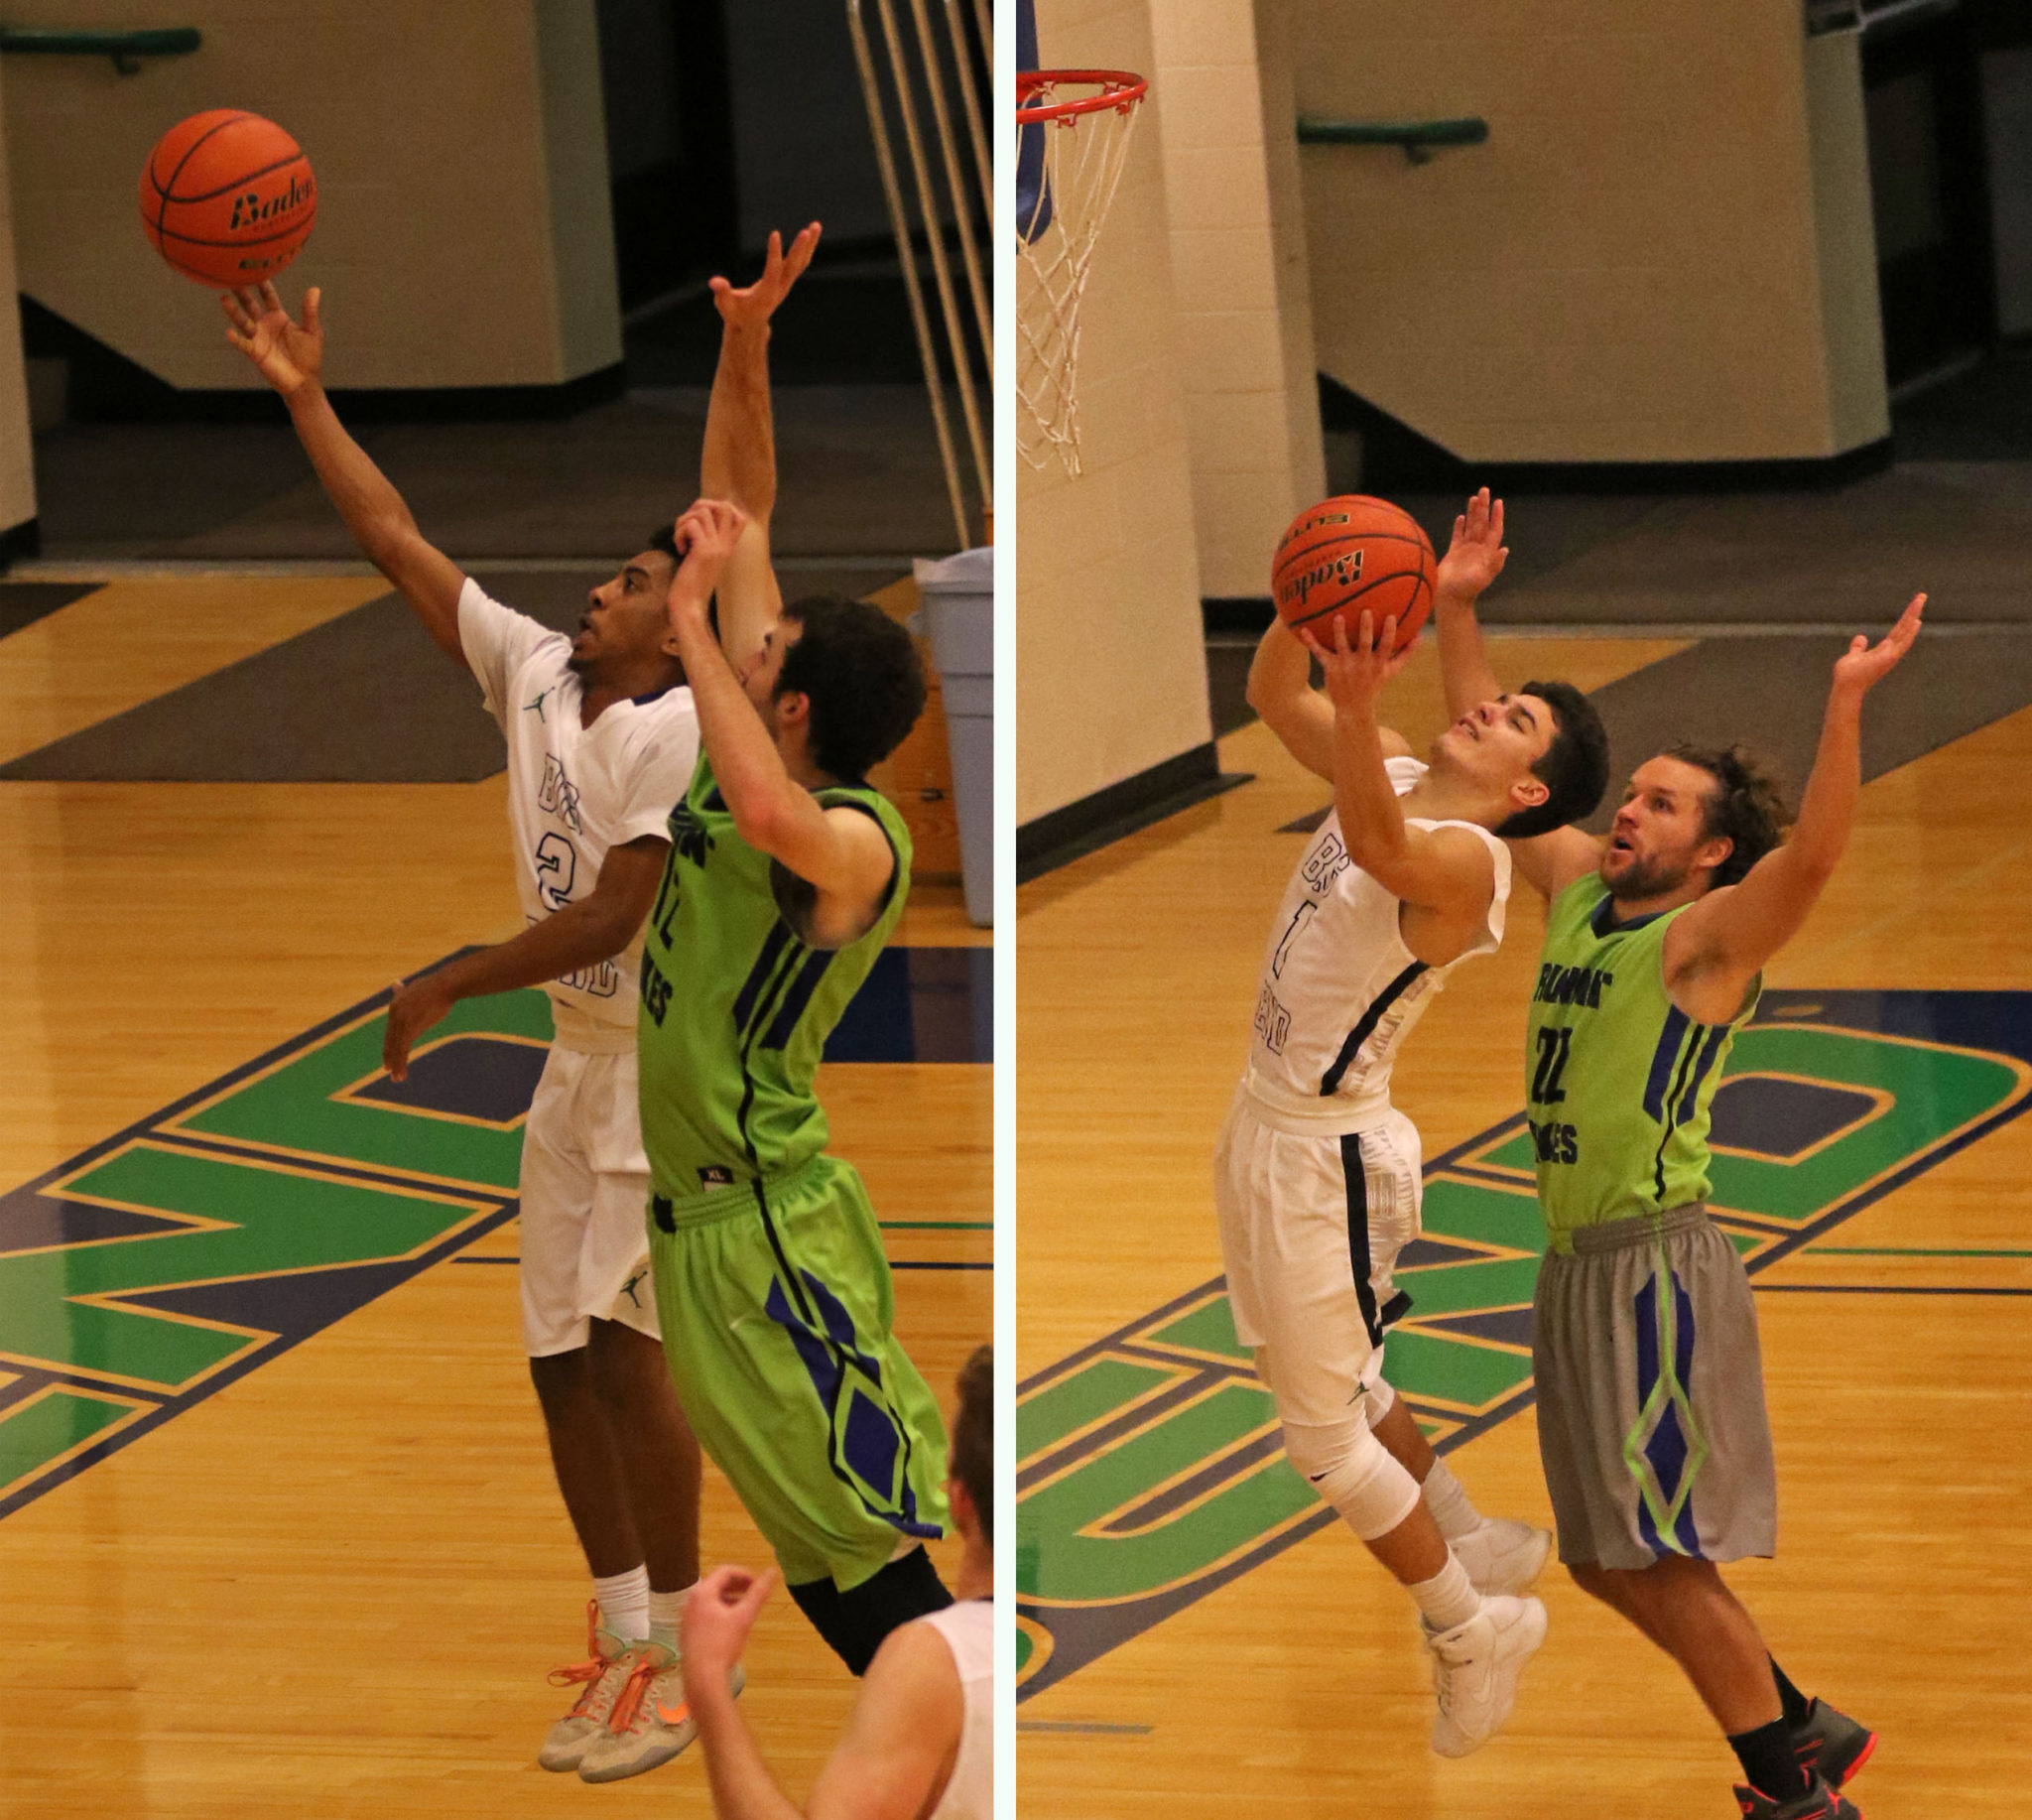 Two basketball players throwing a basketball